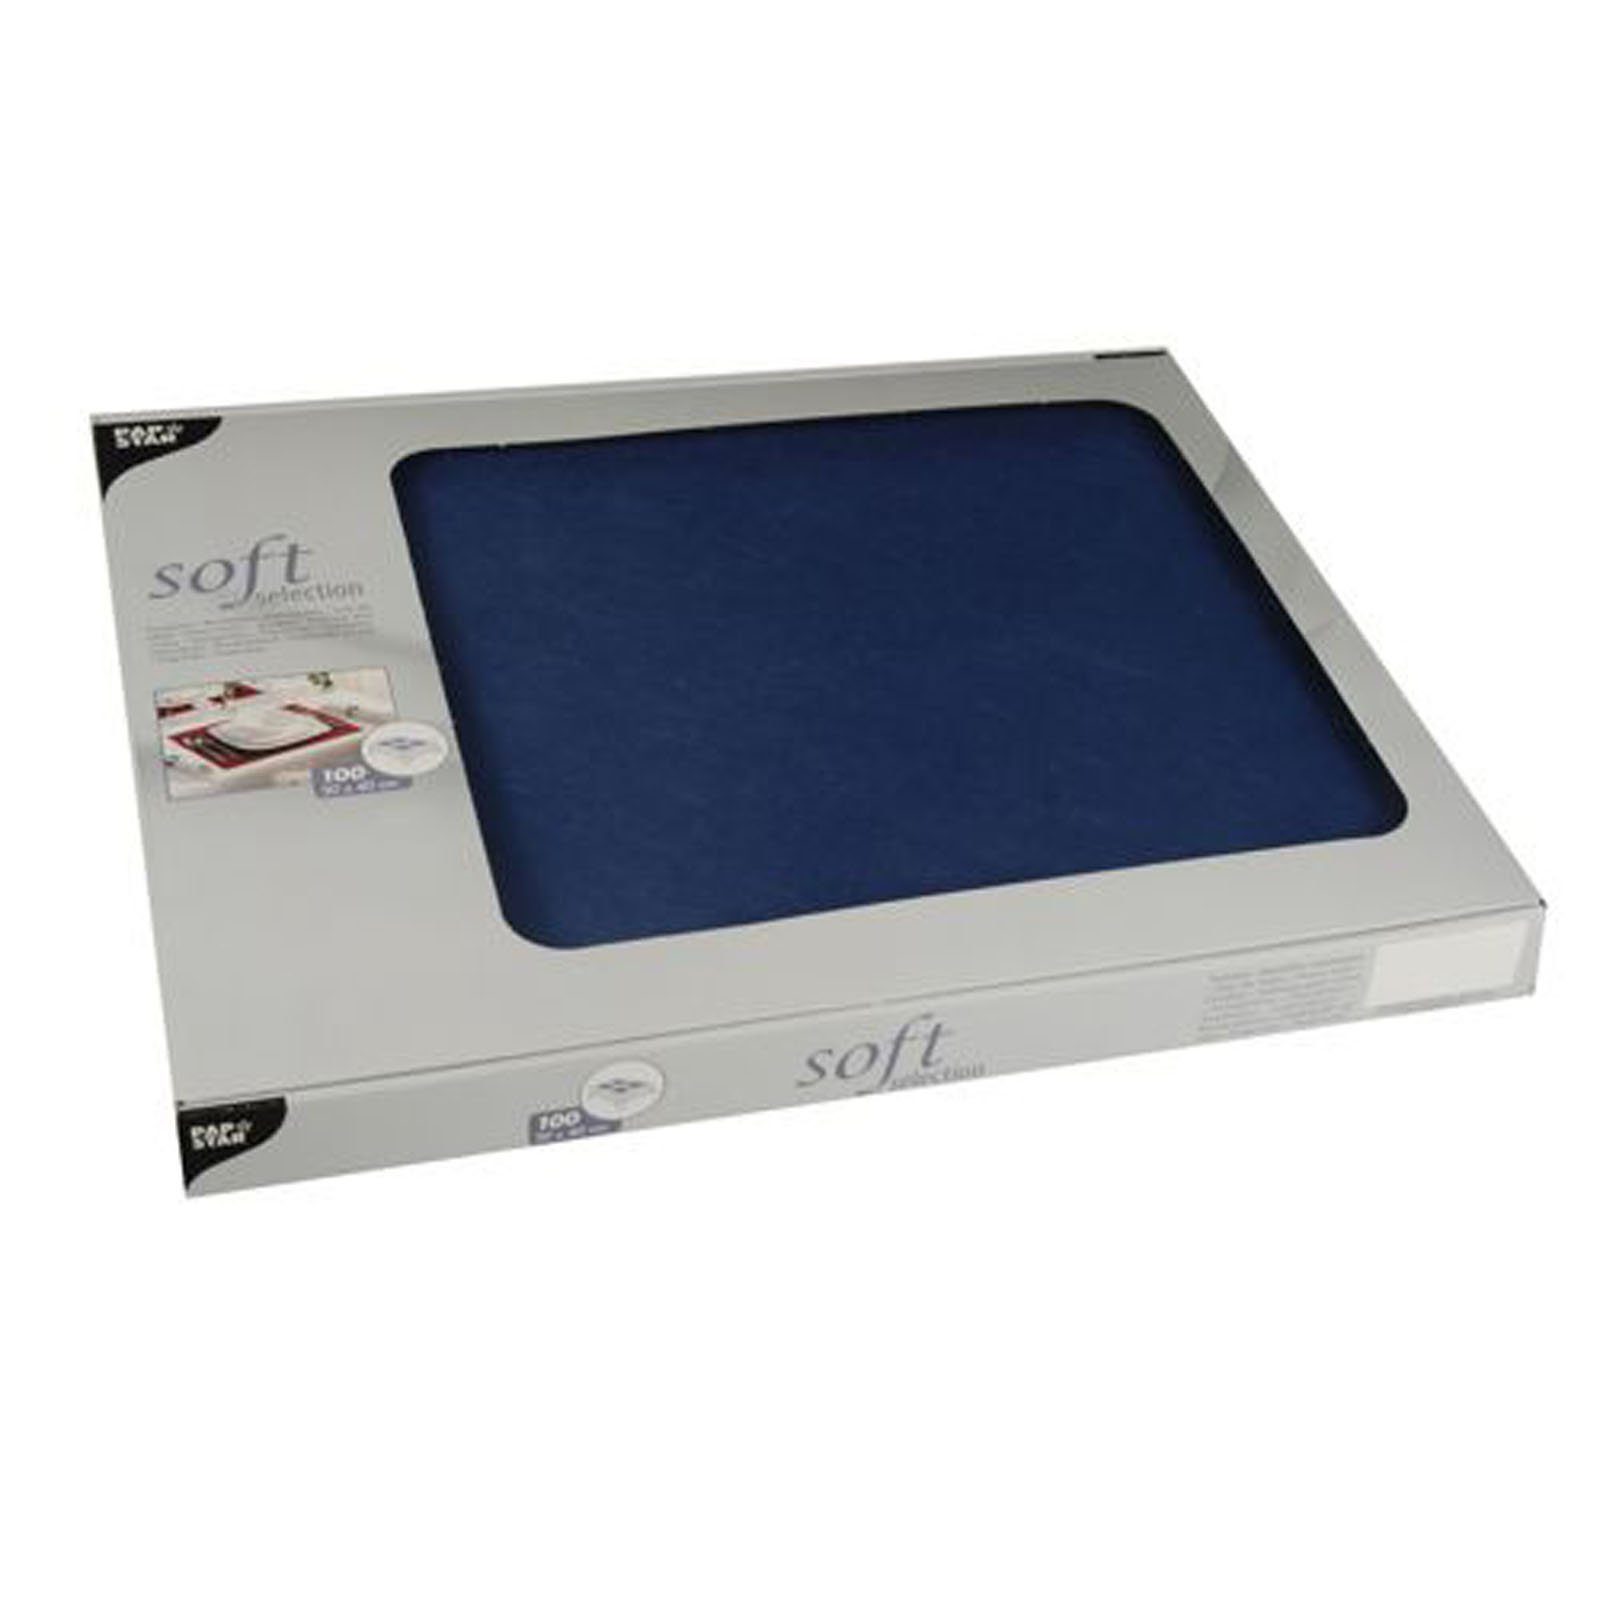 Starpak Einwegschale 600 Stück Vlies Tischsets, dunkelblau soft selection 30 x 40 cm